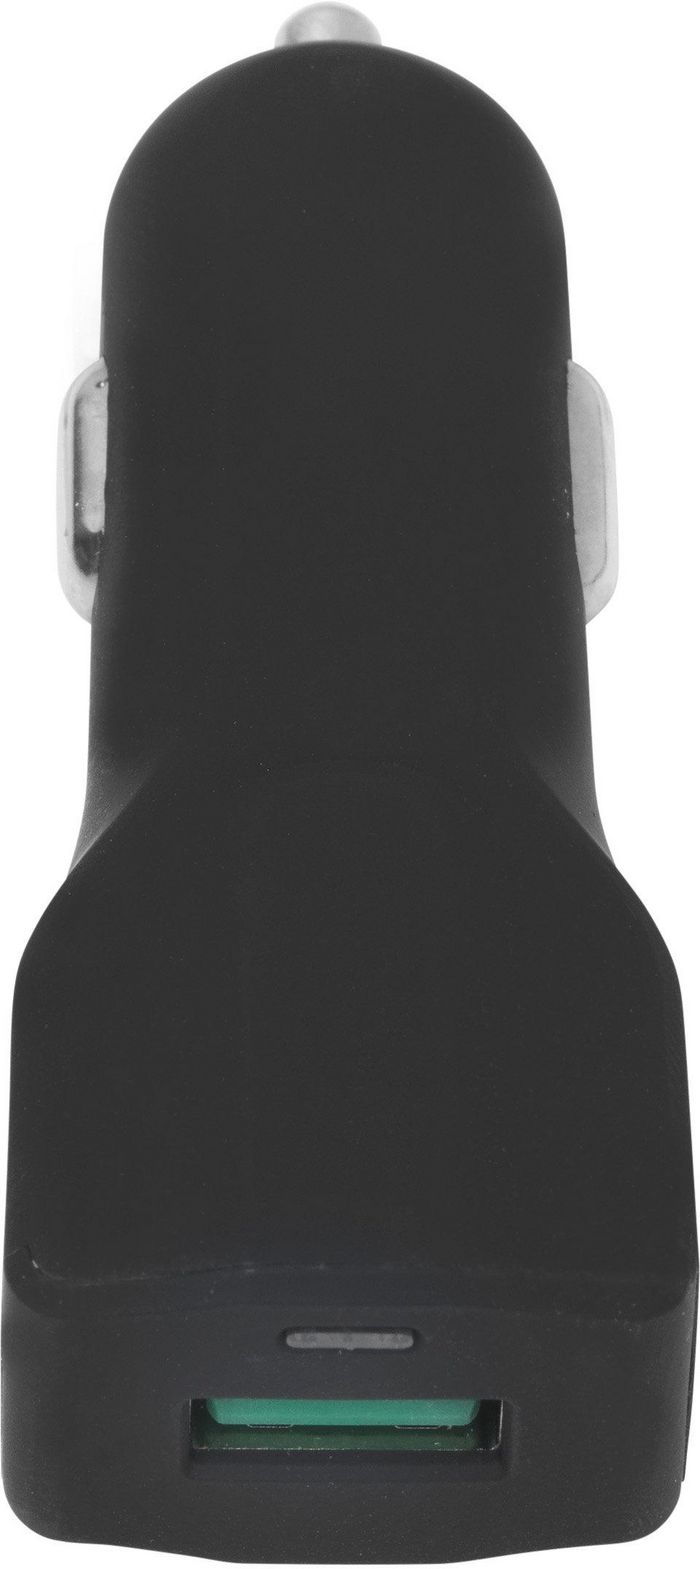 eSTUFF Car Charger 1 USB 2.4A, 12W - W124449321